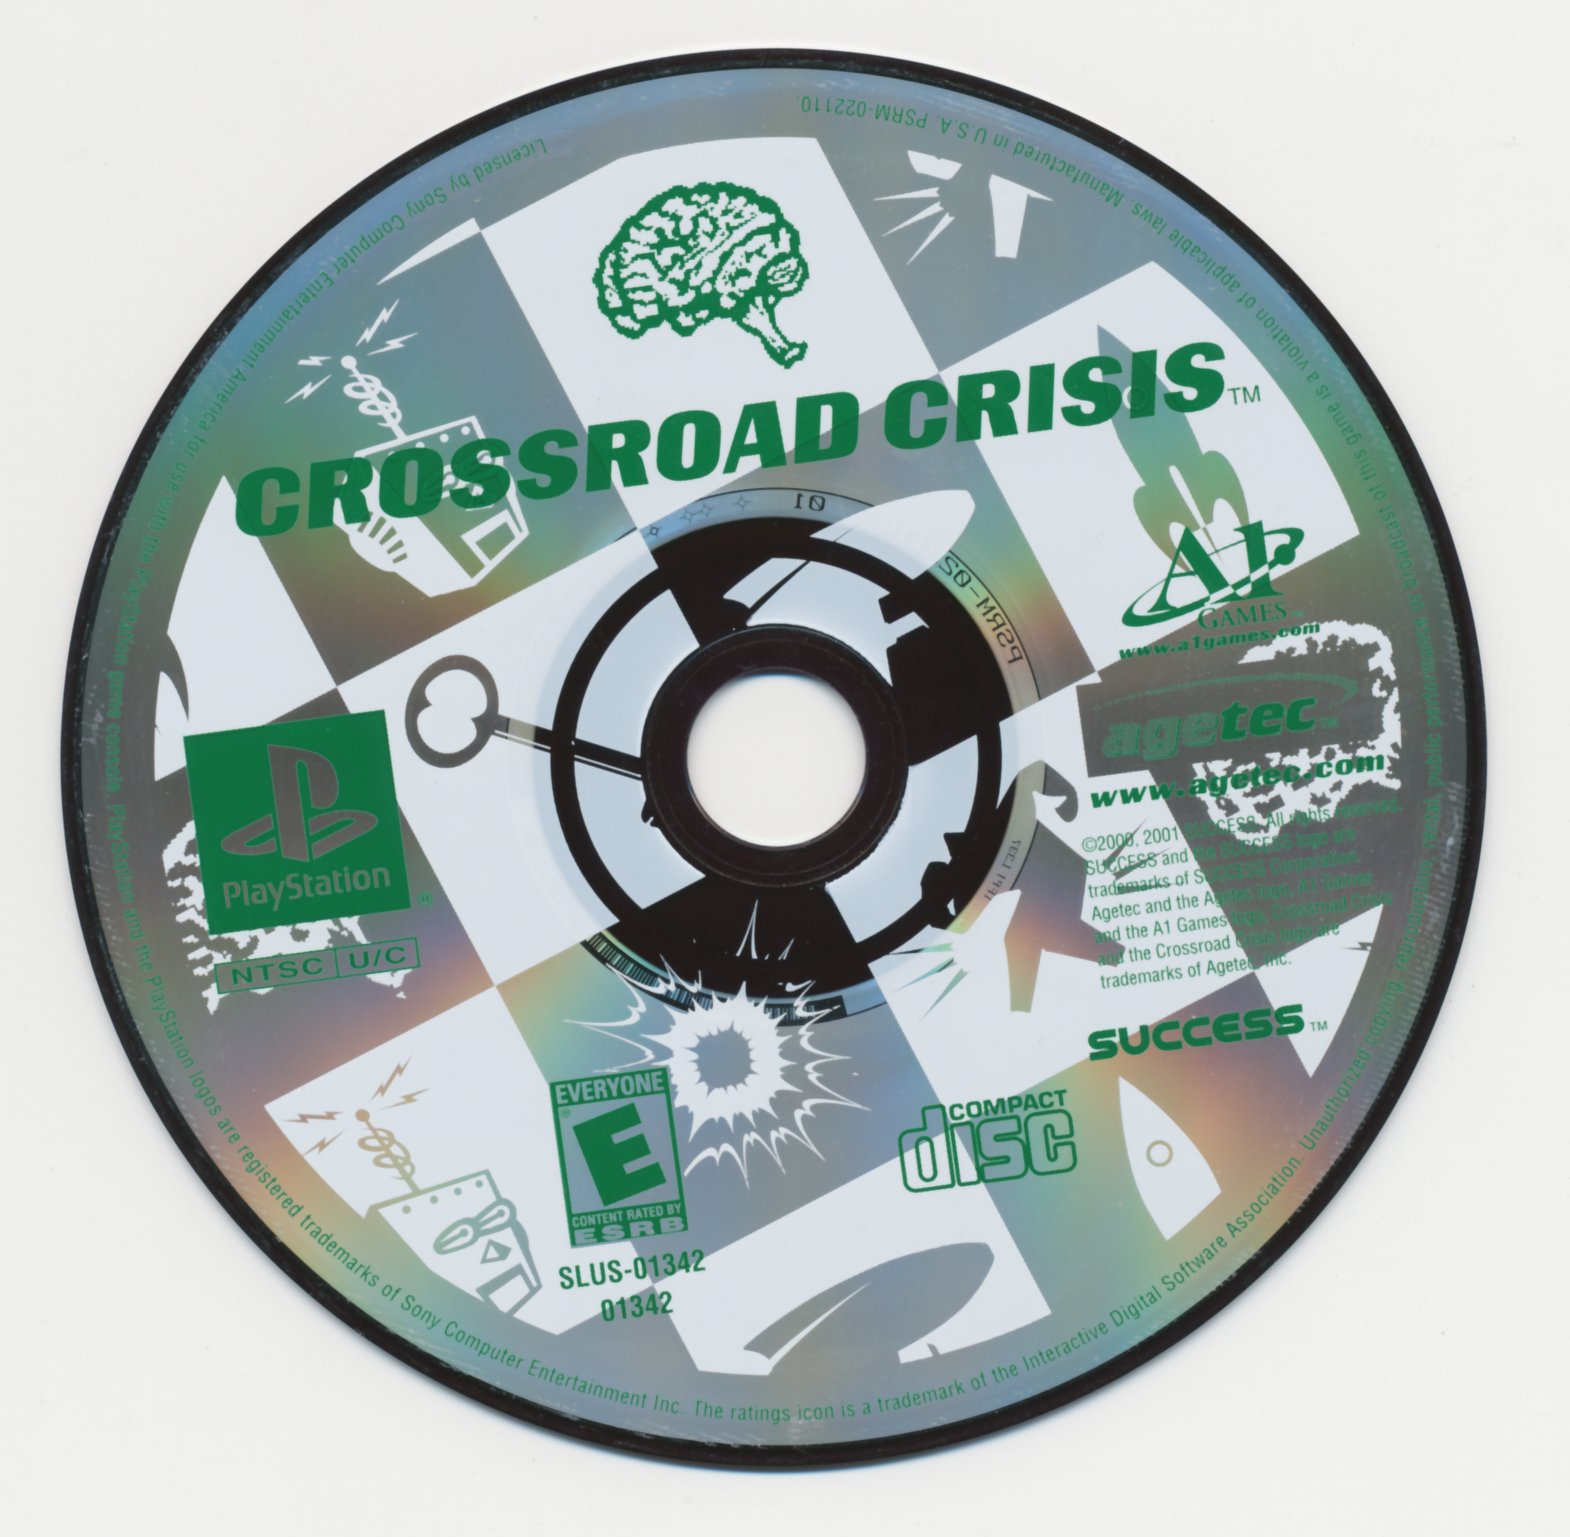 Crossroad Crisis PSX cover